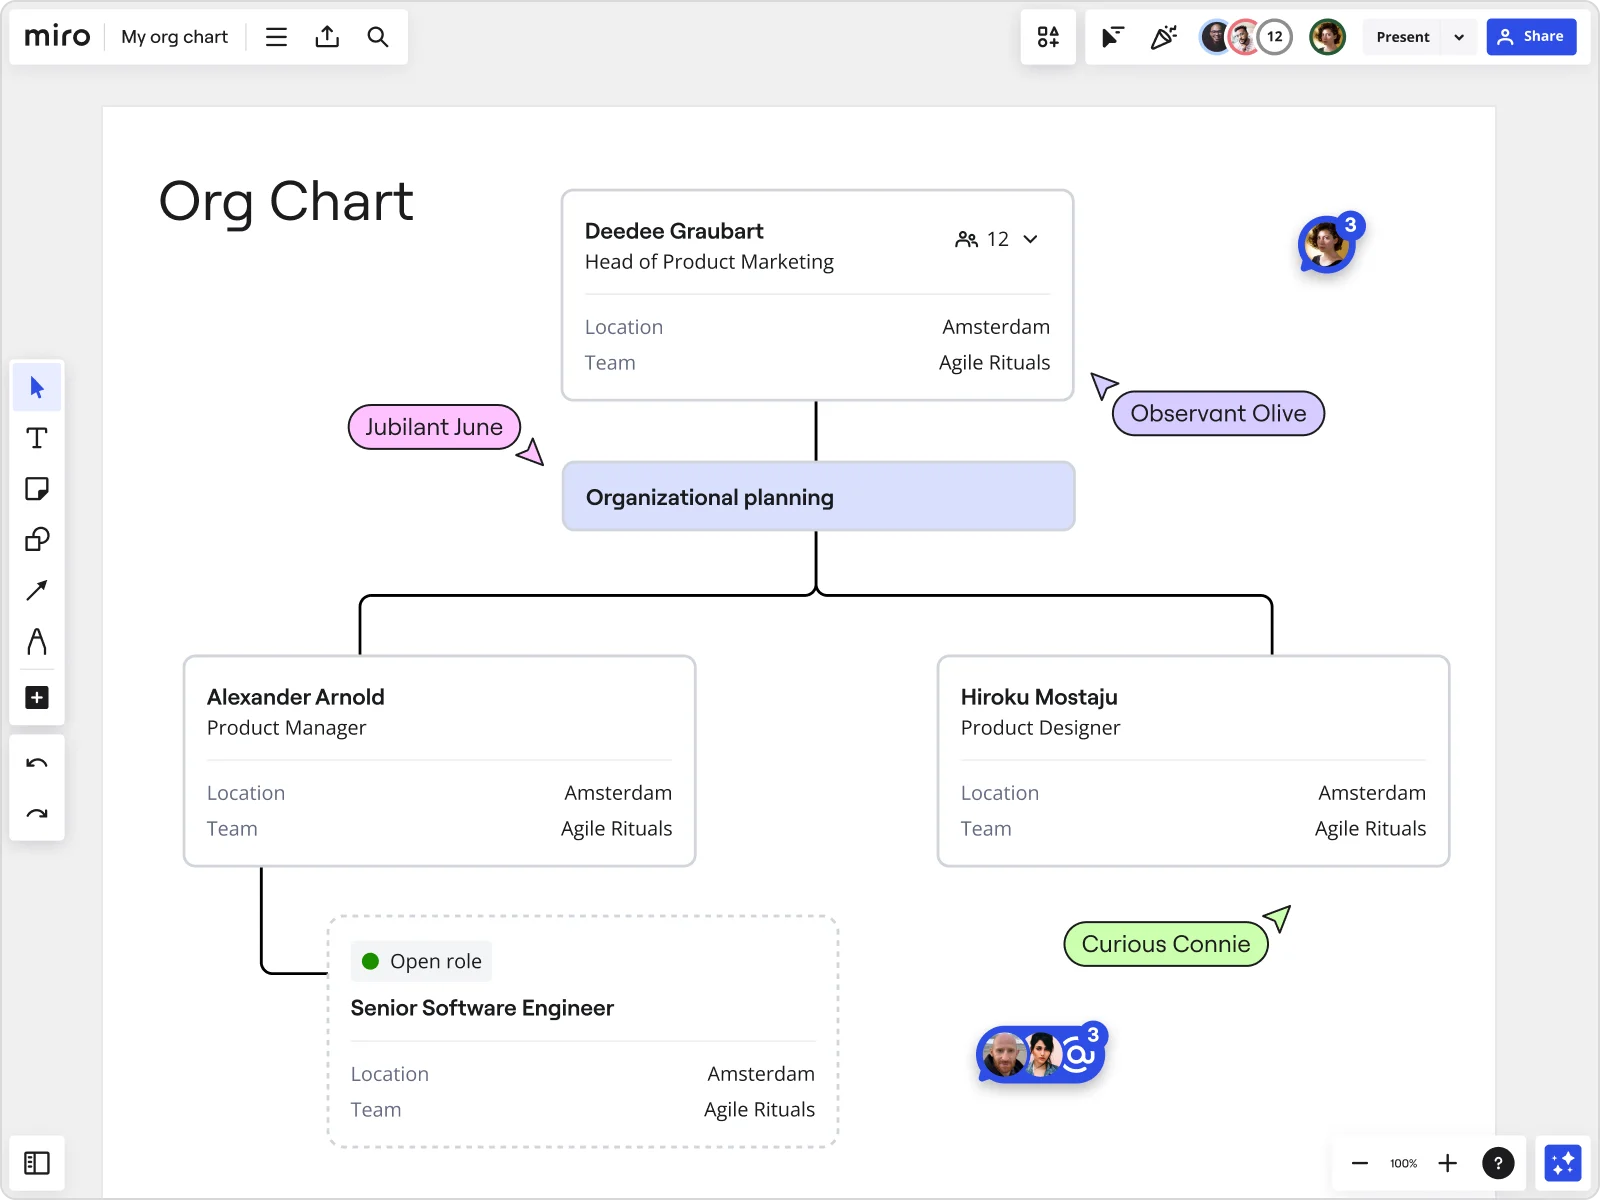 Image of Miro's organizational chart widget